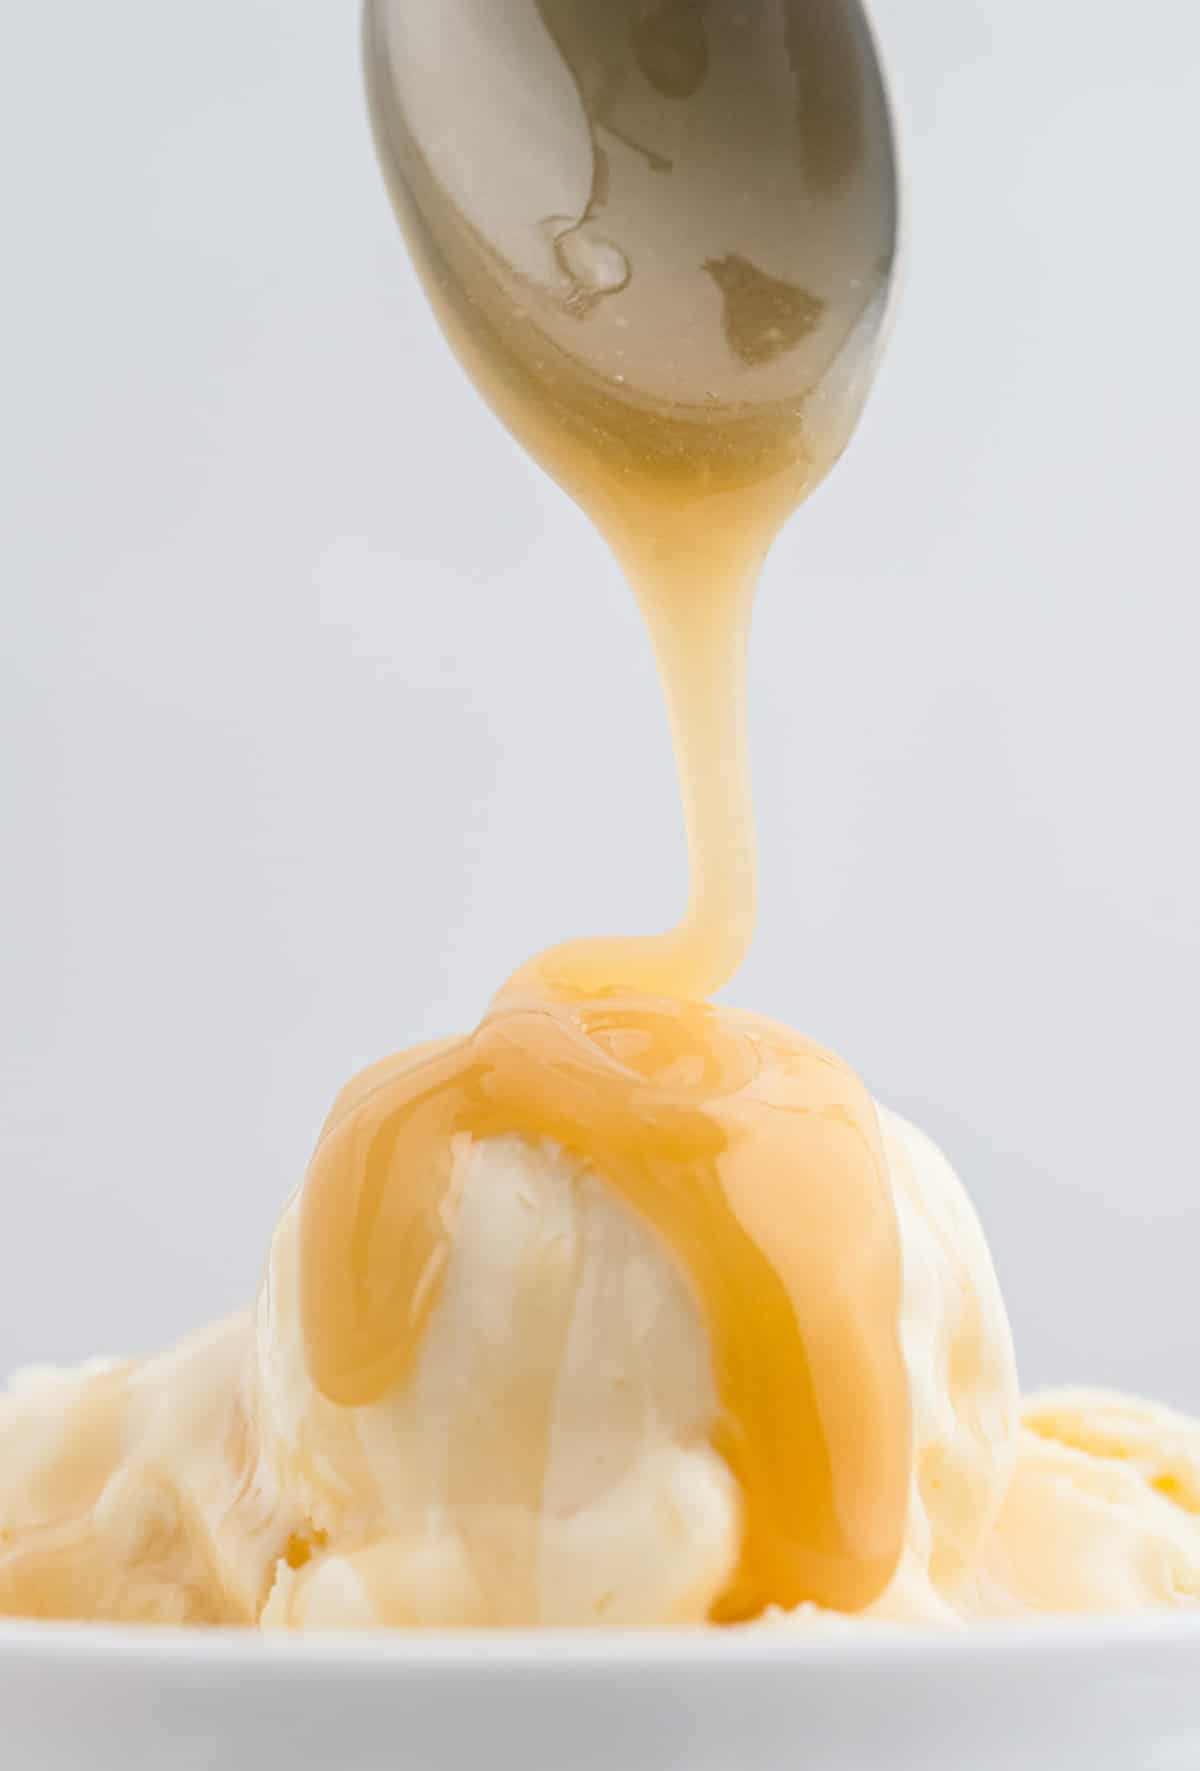 Caramel being drizzled on vanilla ice cream.